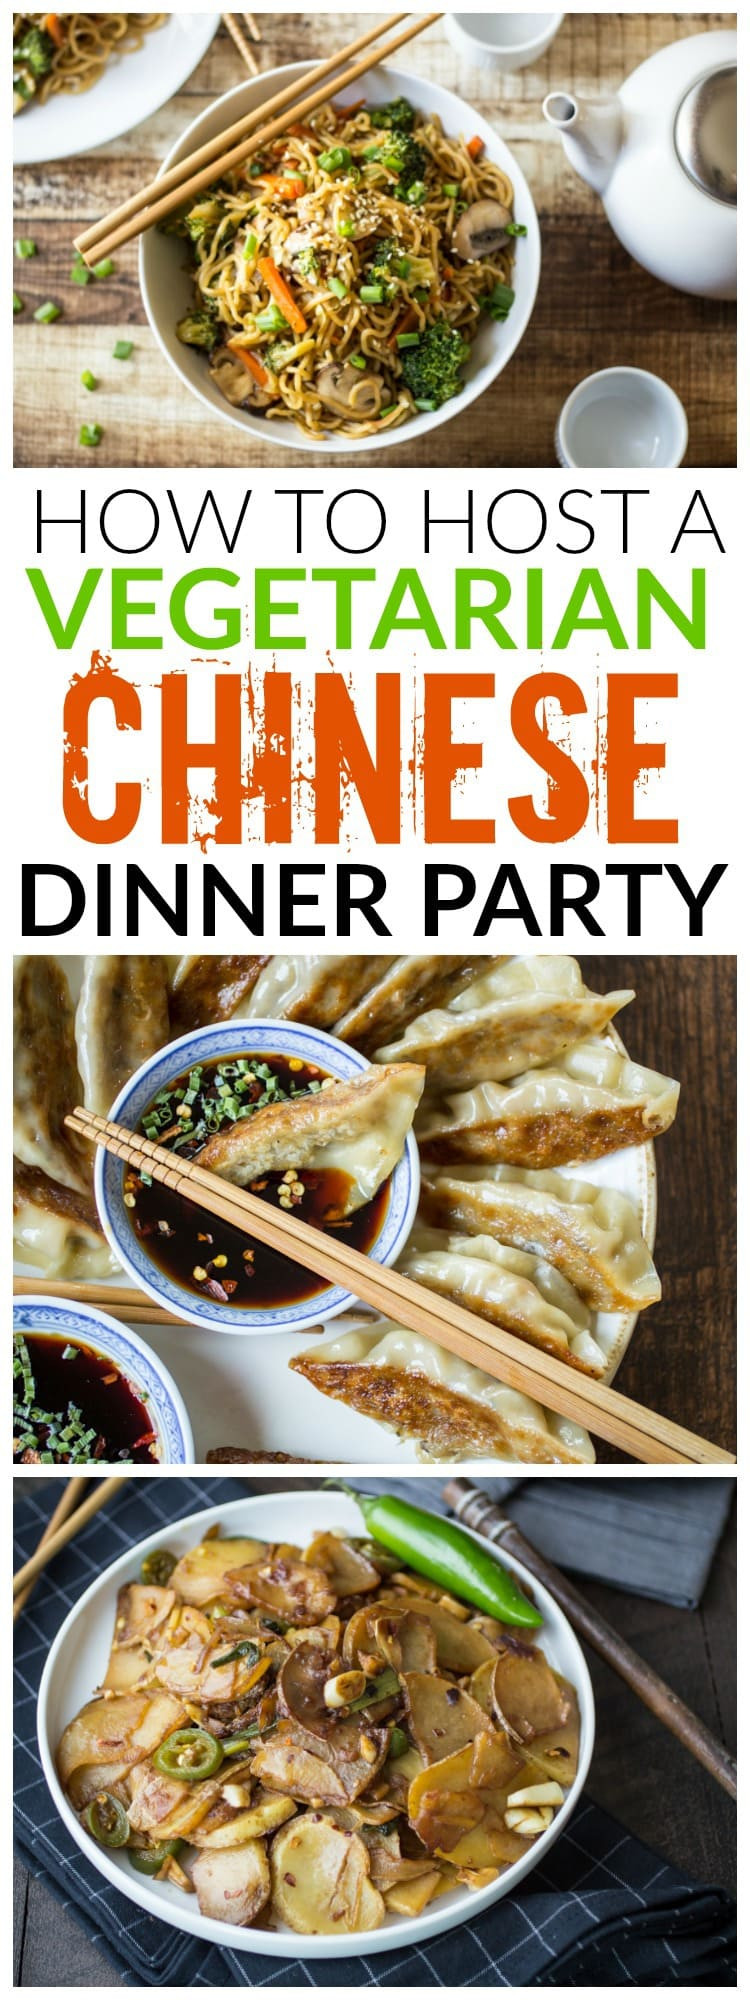 Asian Dinner Ideas
 Ve arian Chinese Dinner Party Menu The Wanderlust Kitchen